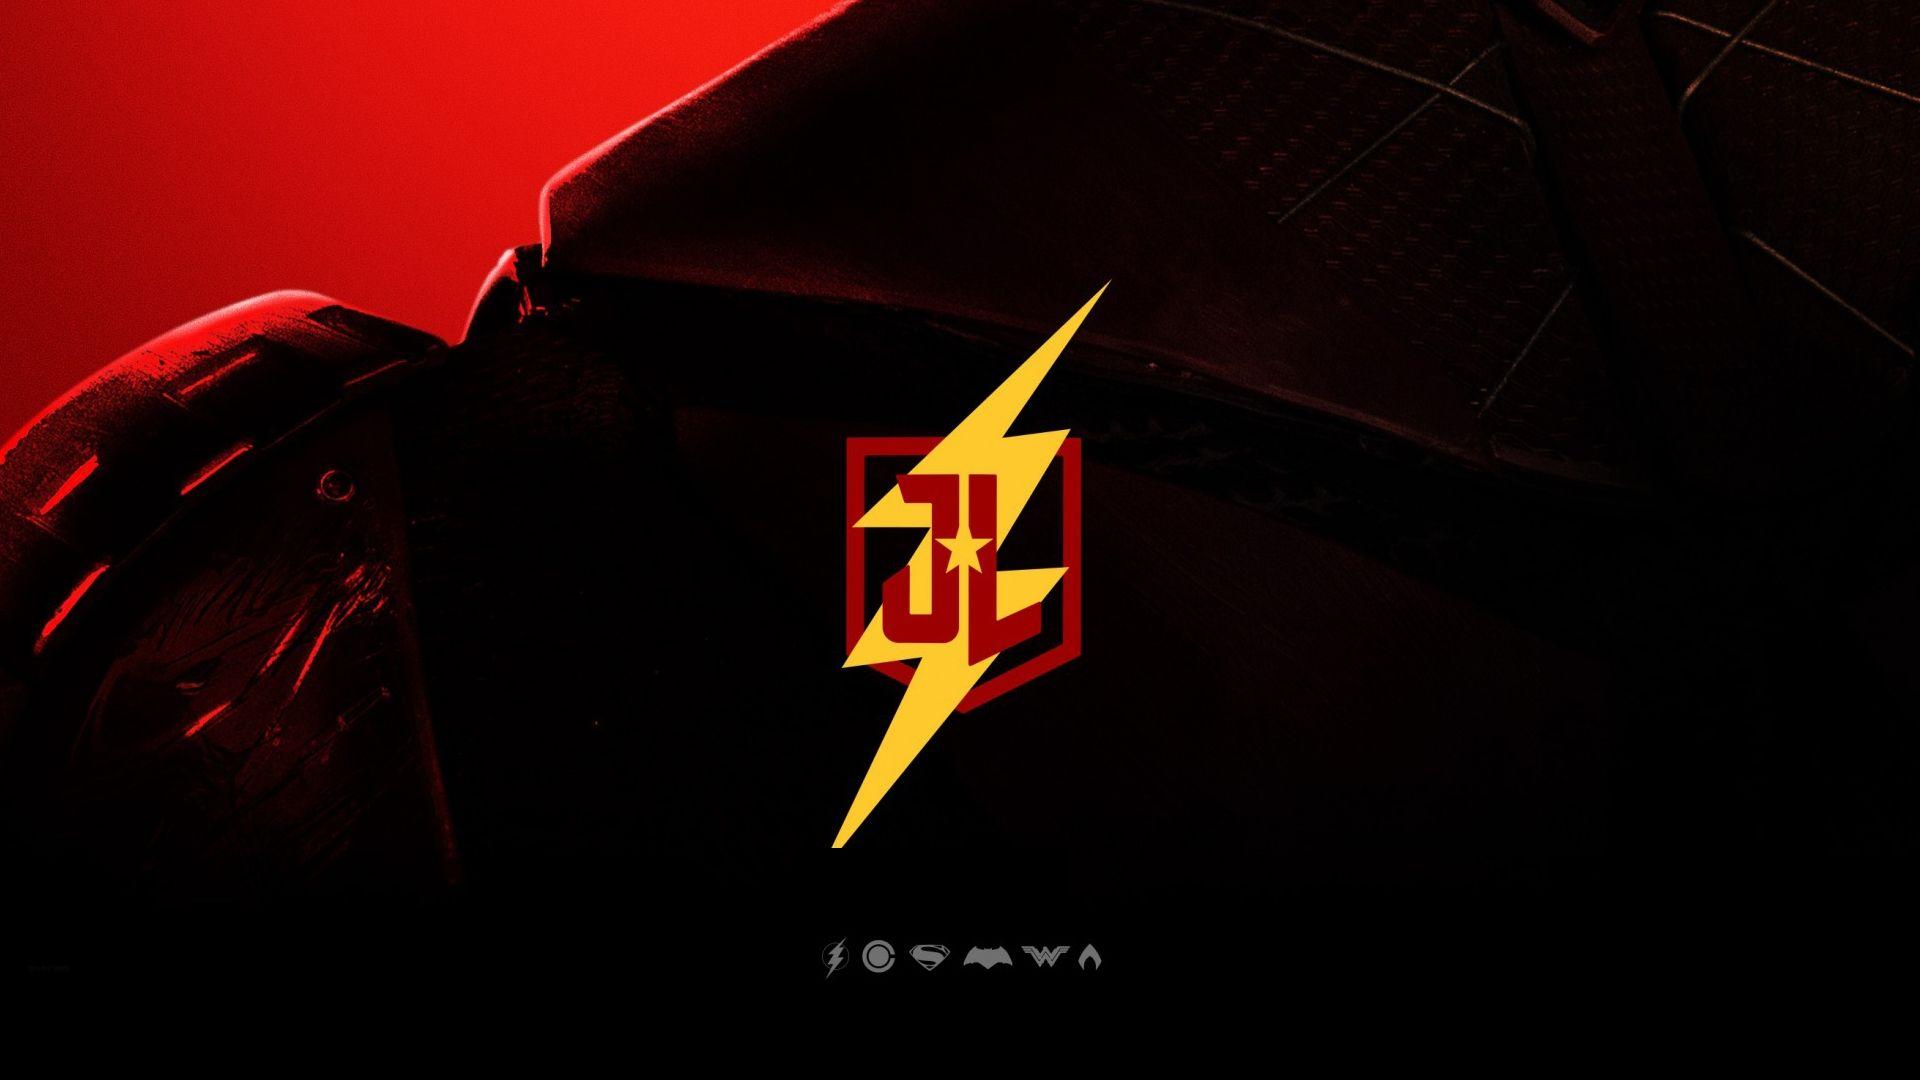 HD Justice League The Flash Logo 2017 Movie